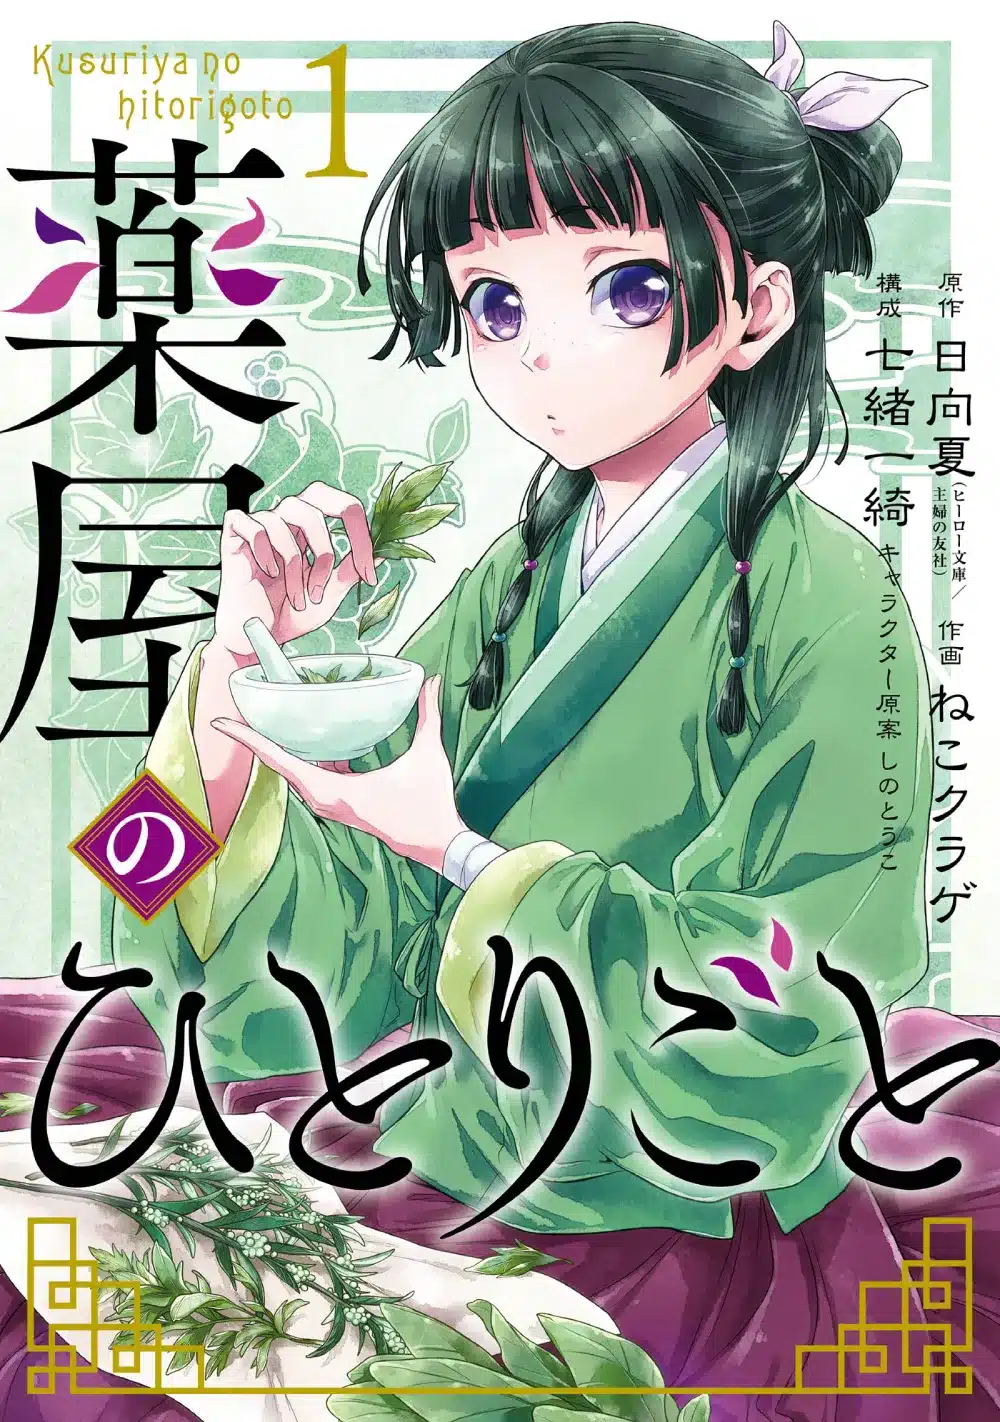 Kusuriya No Hitorigoto Visual Manga 02